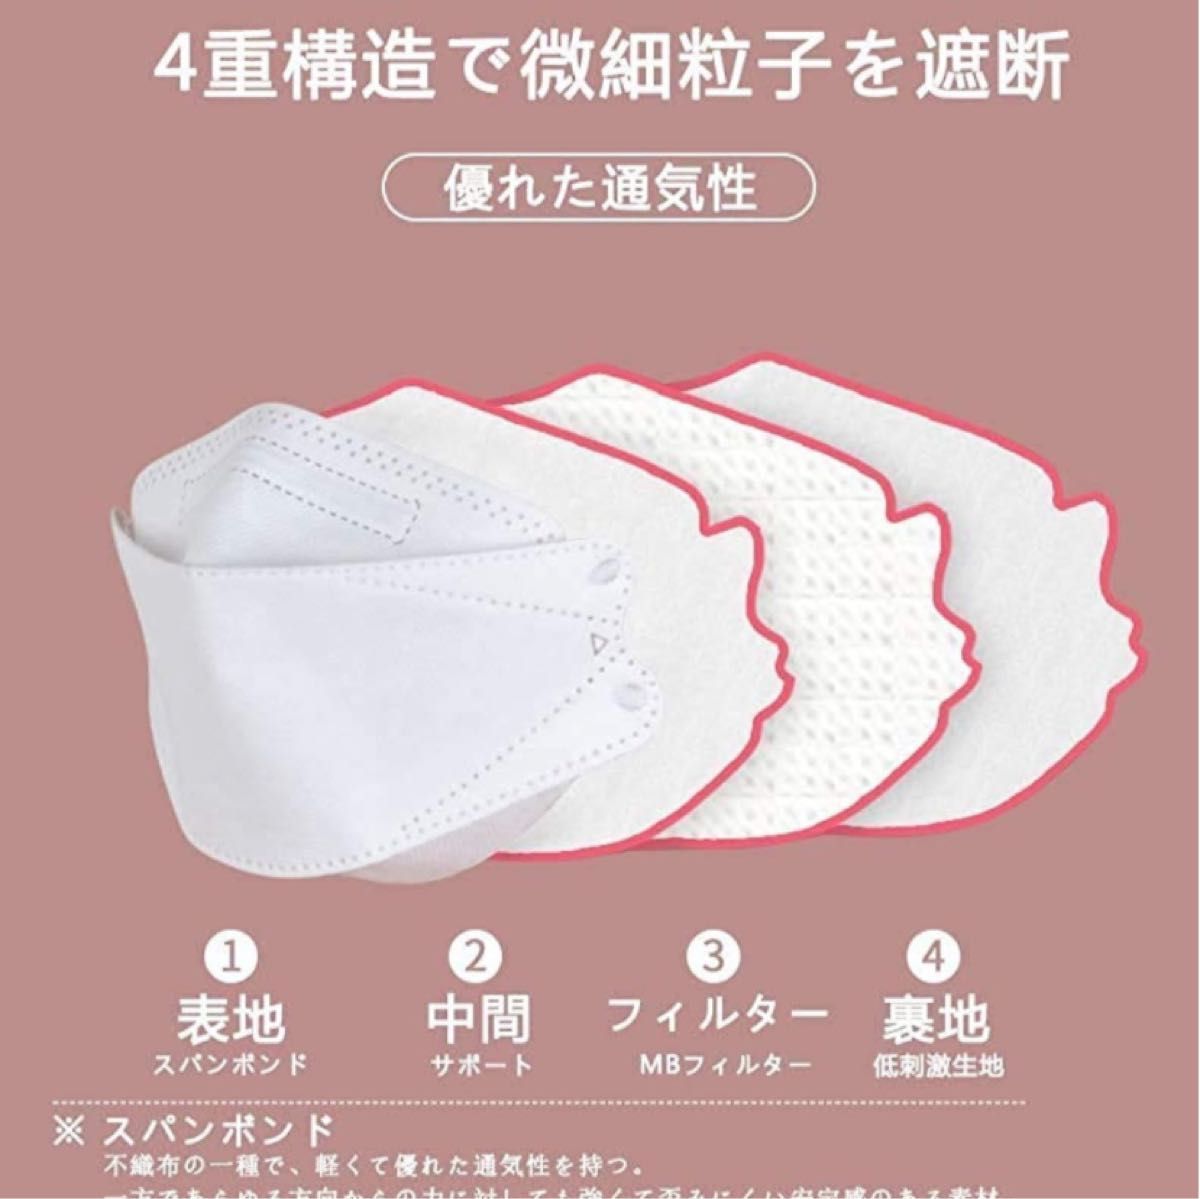 KF94マスク 大人用 8枚セット 個別包装 4層構造 立体構造 男女兼用 飛沫防止 防塵 花粉症 通気 口紅が付きにくい